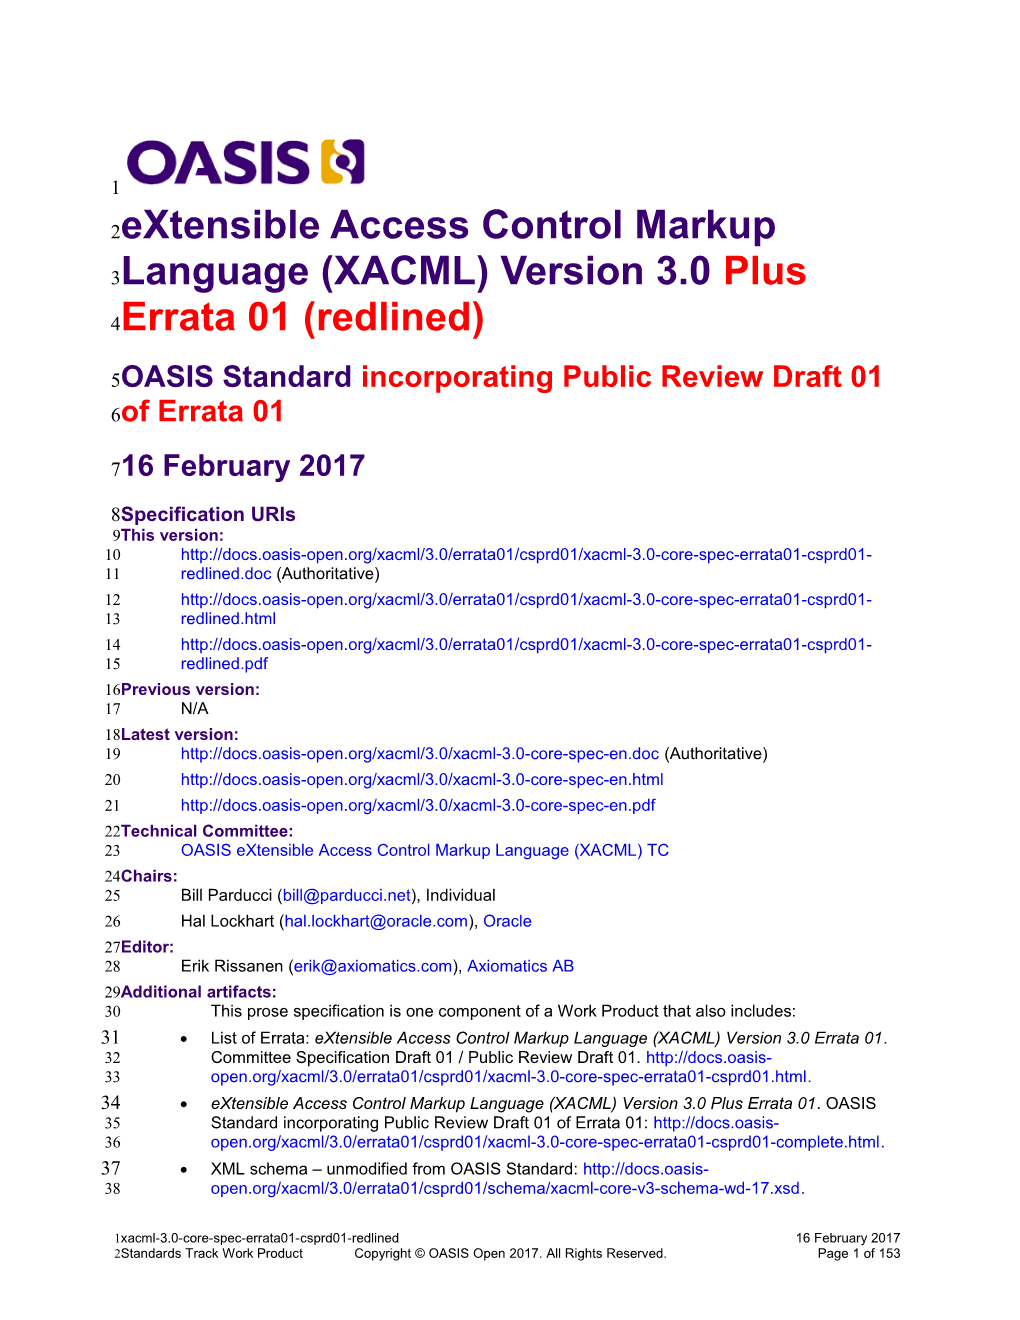 Extensible Access Control Markup Language (XACML) Version 3.0 Plus Errata 01 (Redlined)